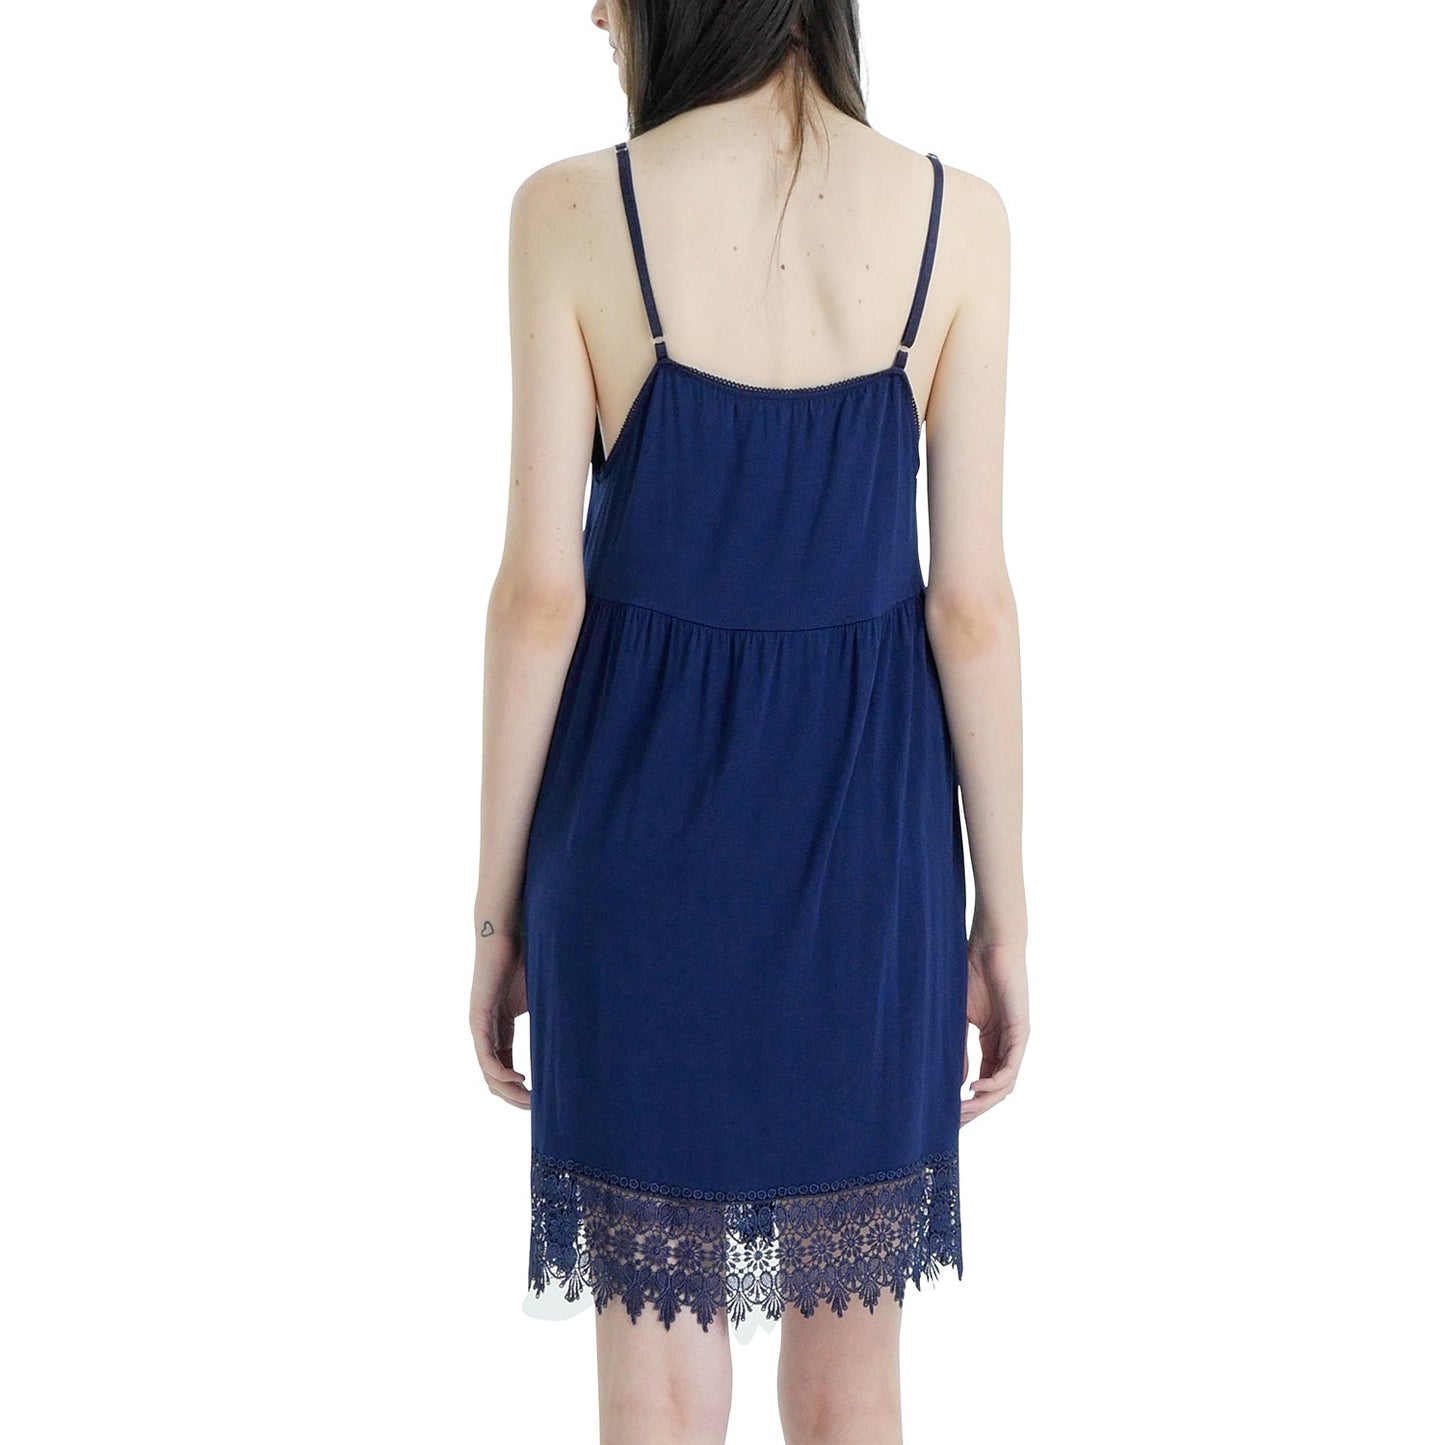 Modal Flare Lace Trim Slip Dress with Adjustable Straps - Shop Lev